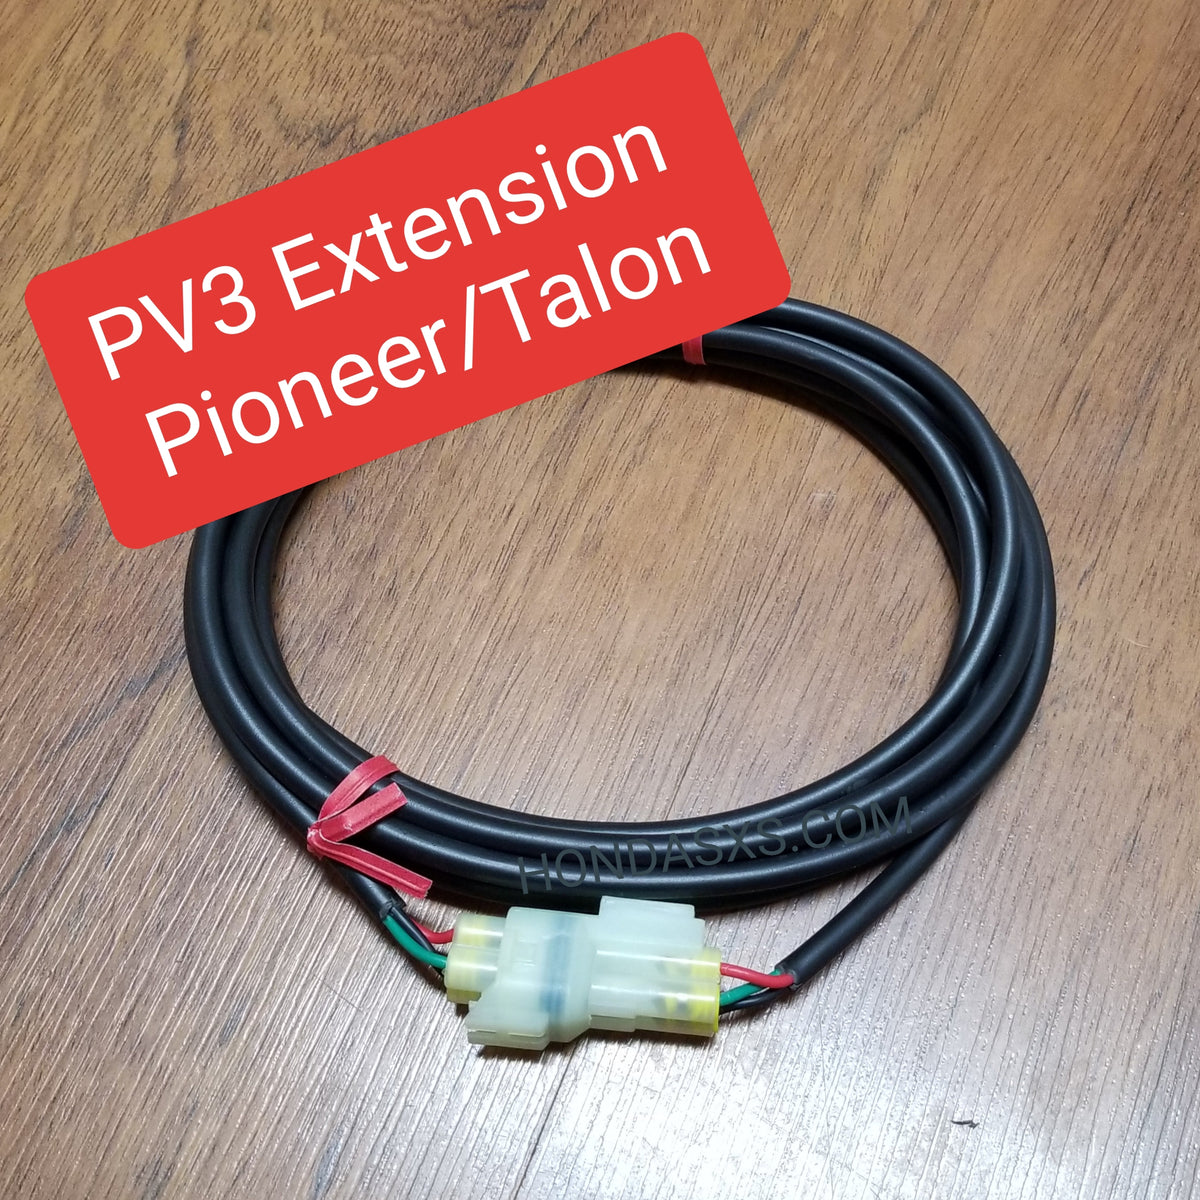 Power Vision PV3 EXTENSION (4 pin DIA) for Honda Pioneer, Honda Talon